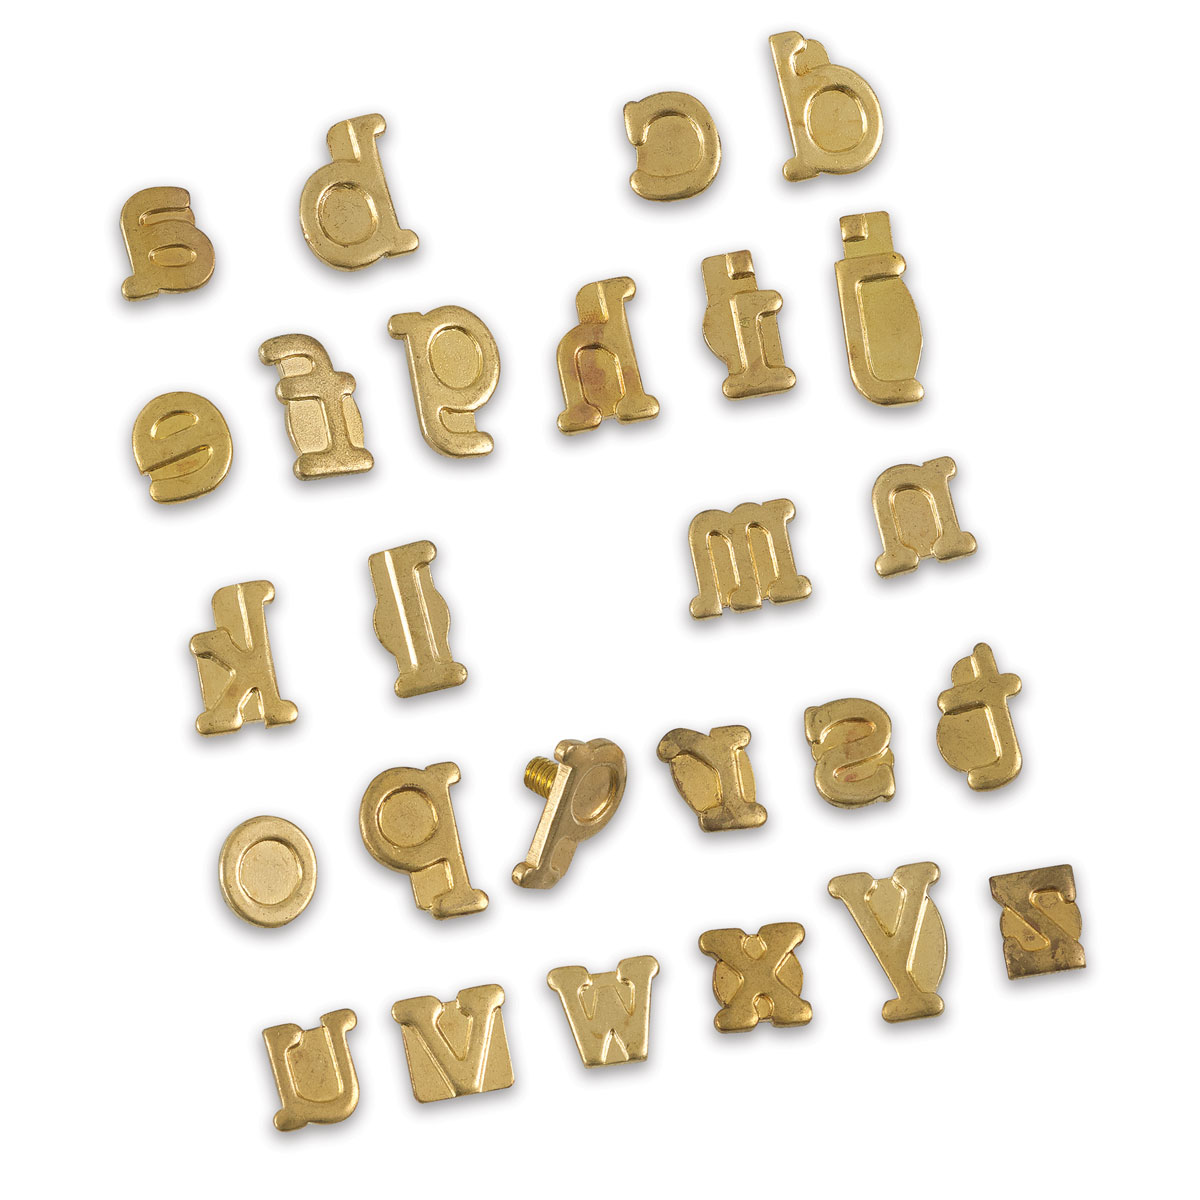 Walnut Hollow Mini Hot Stamps Alphabet Set, Lower Case 